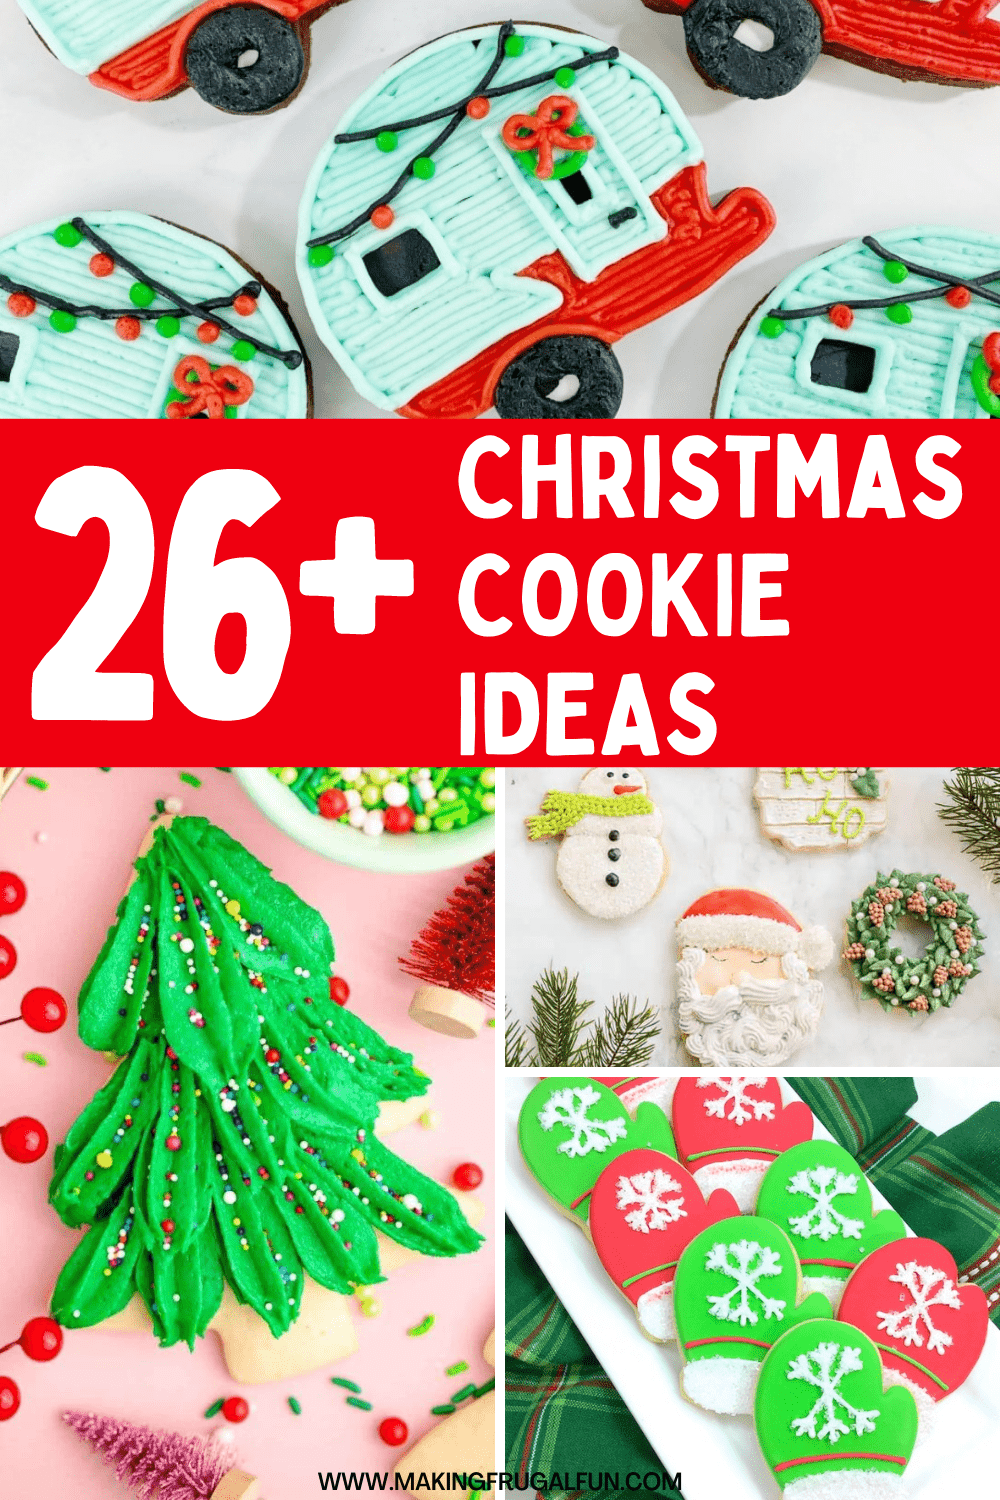 Christmas Sugar Cookie Decorating Ideas